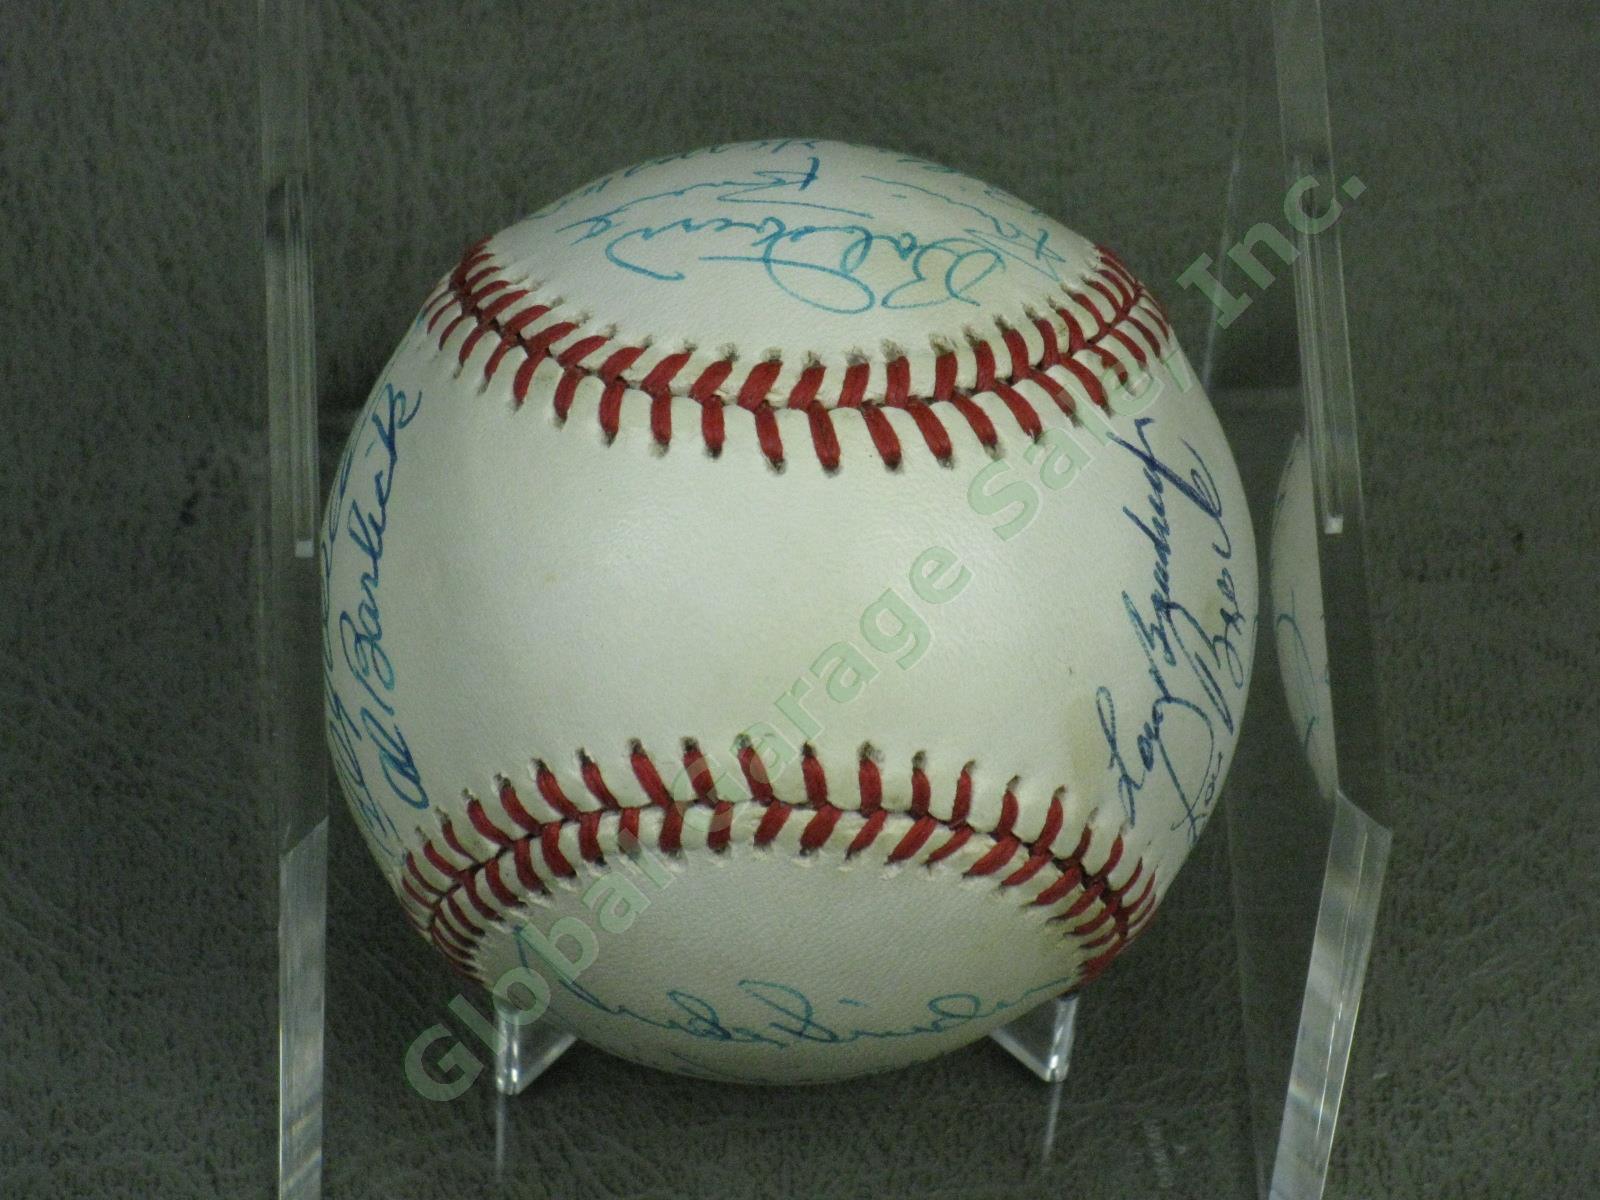 RARE Signed HOF Baseball 17 Autographs! Doerr Snider Ford Brock Robinson Banks + 5